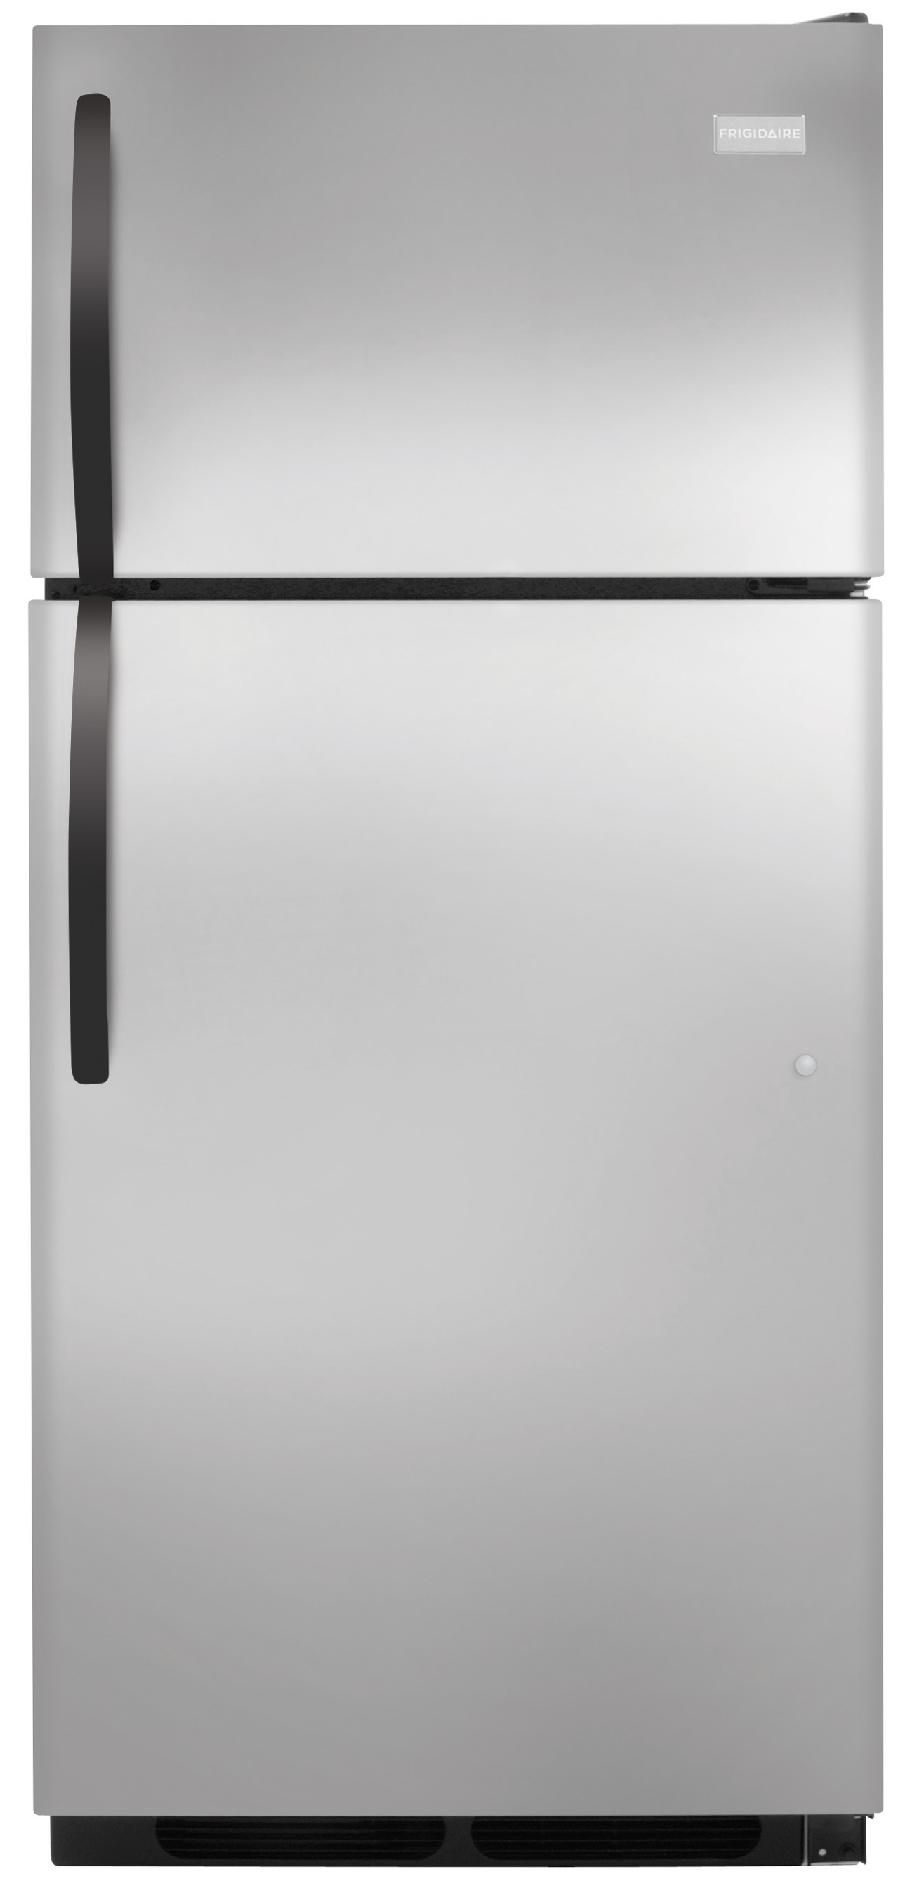 Frigidaire 16.5 cu. ft. Top-Freezer Refrigerator - Stainless Steel